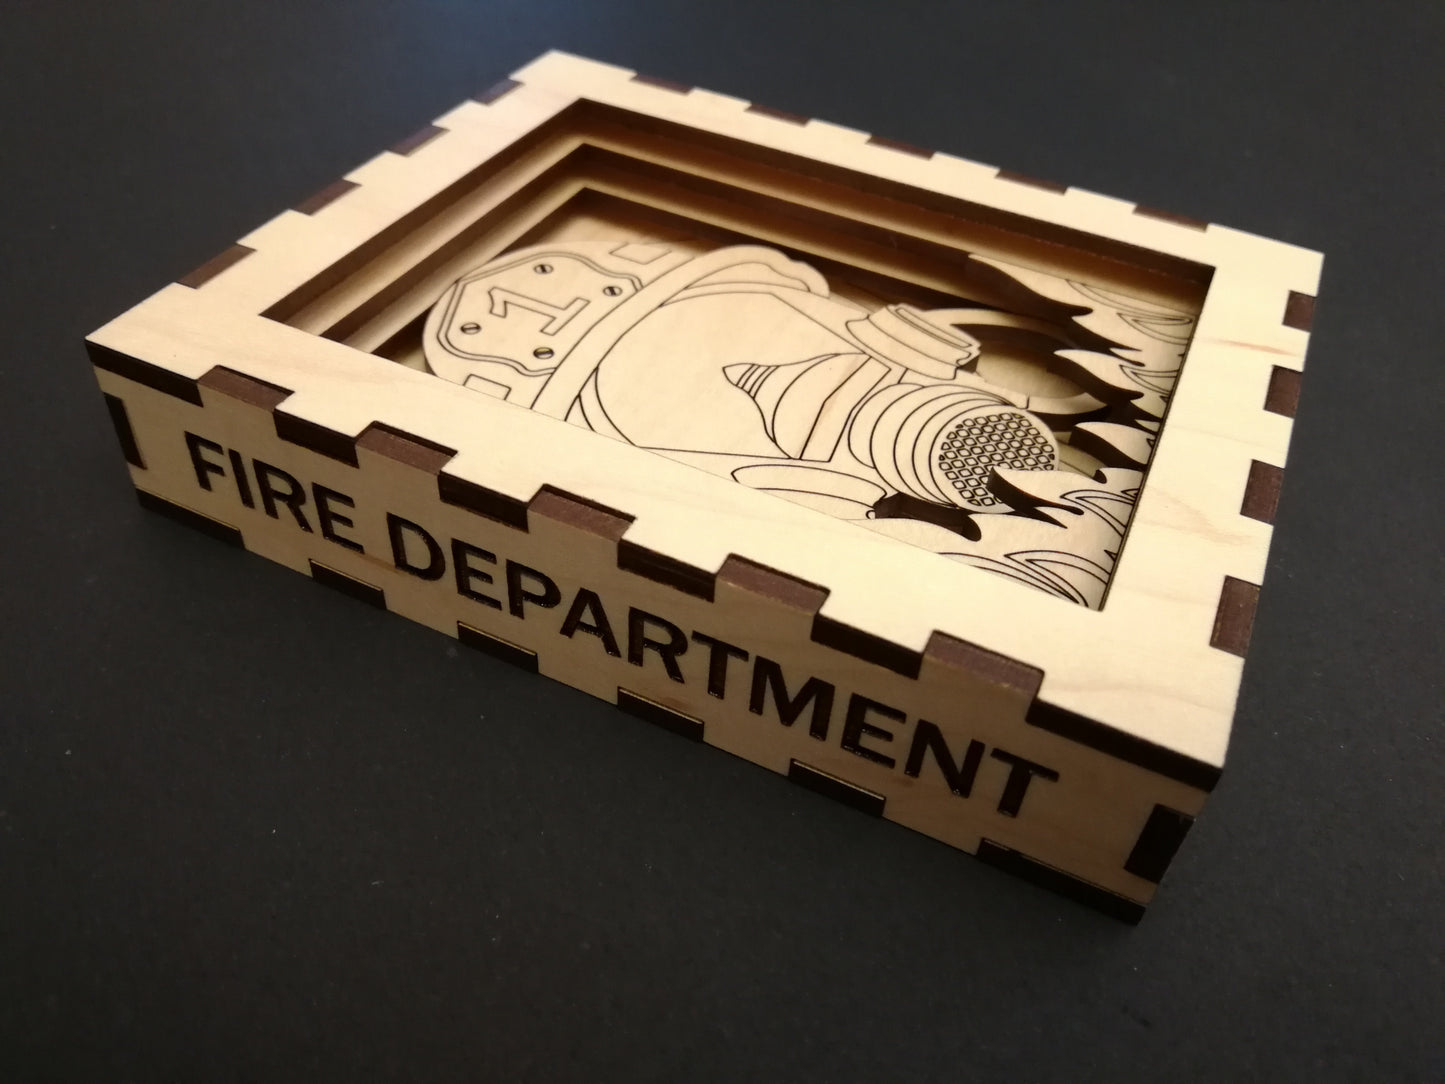 Fire Department Box